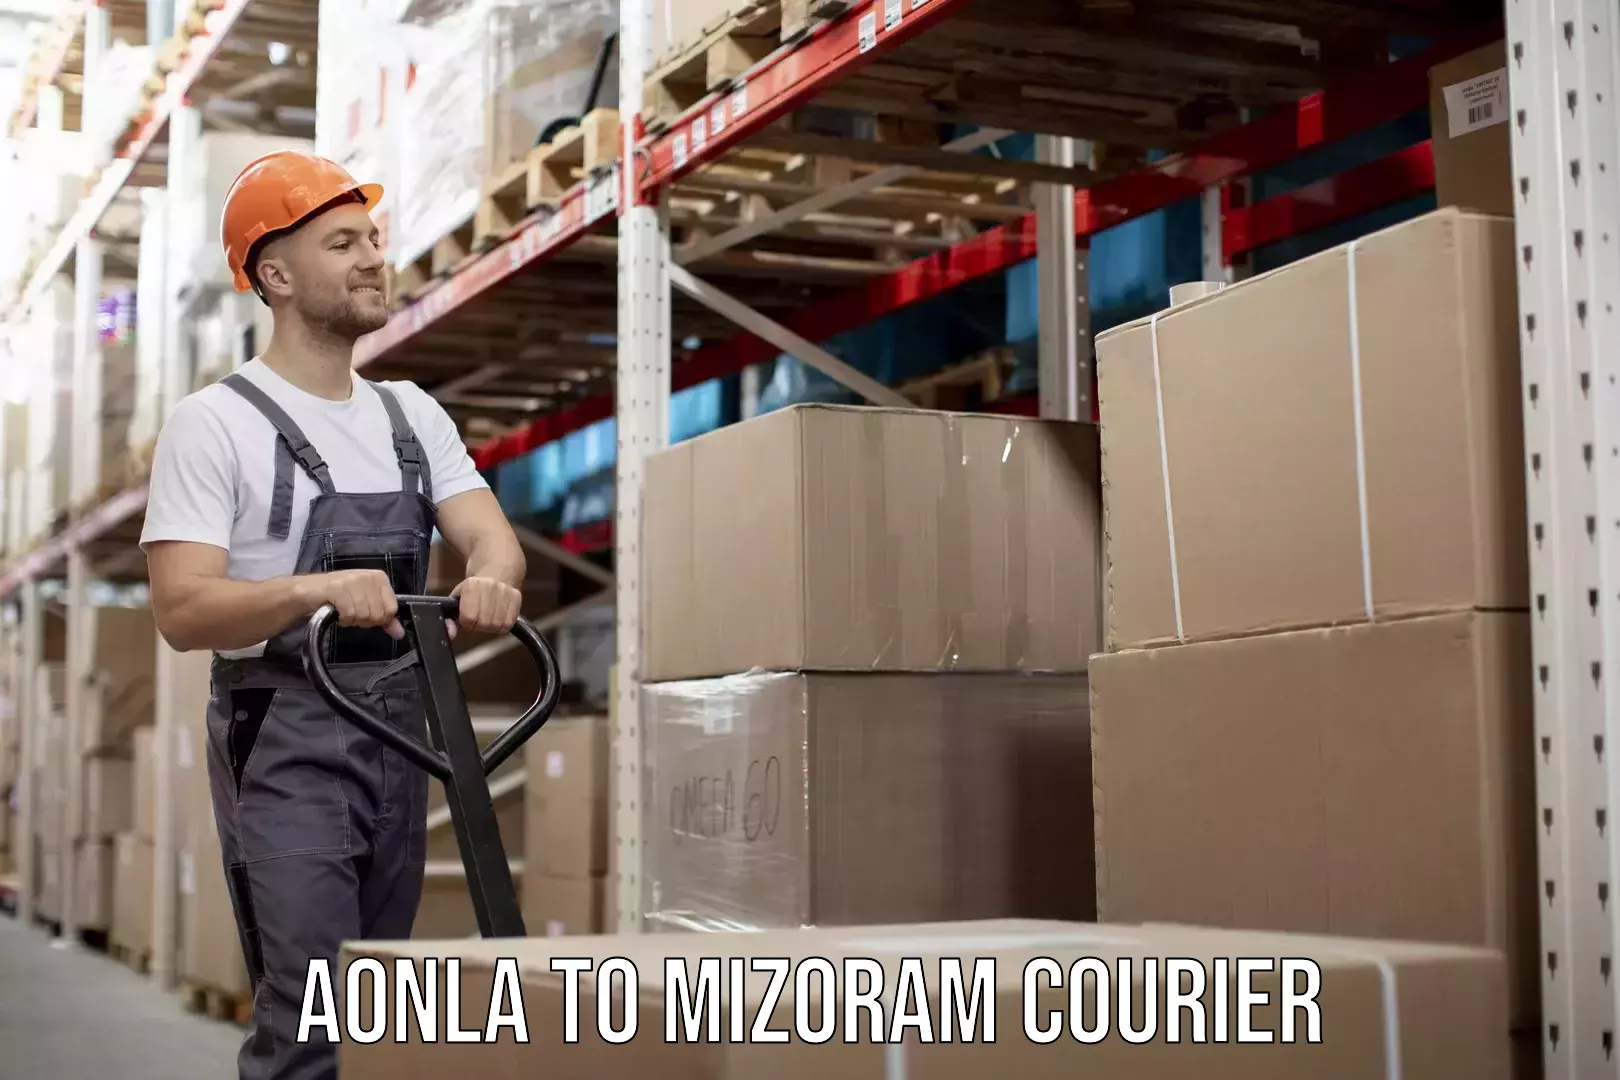 User-friendly delivery service Aonla to Mizoram